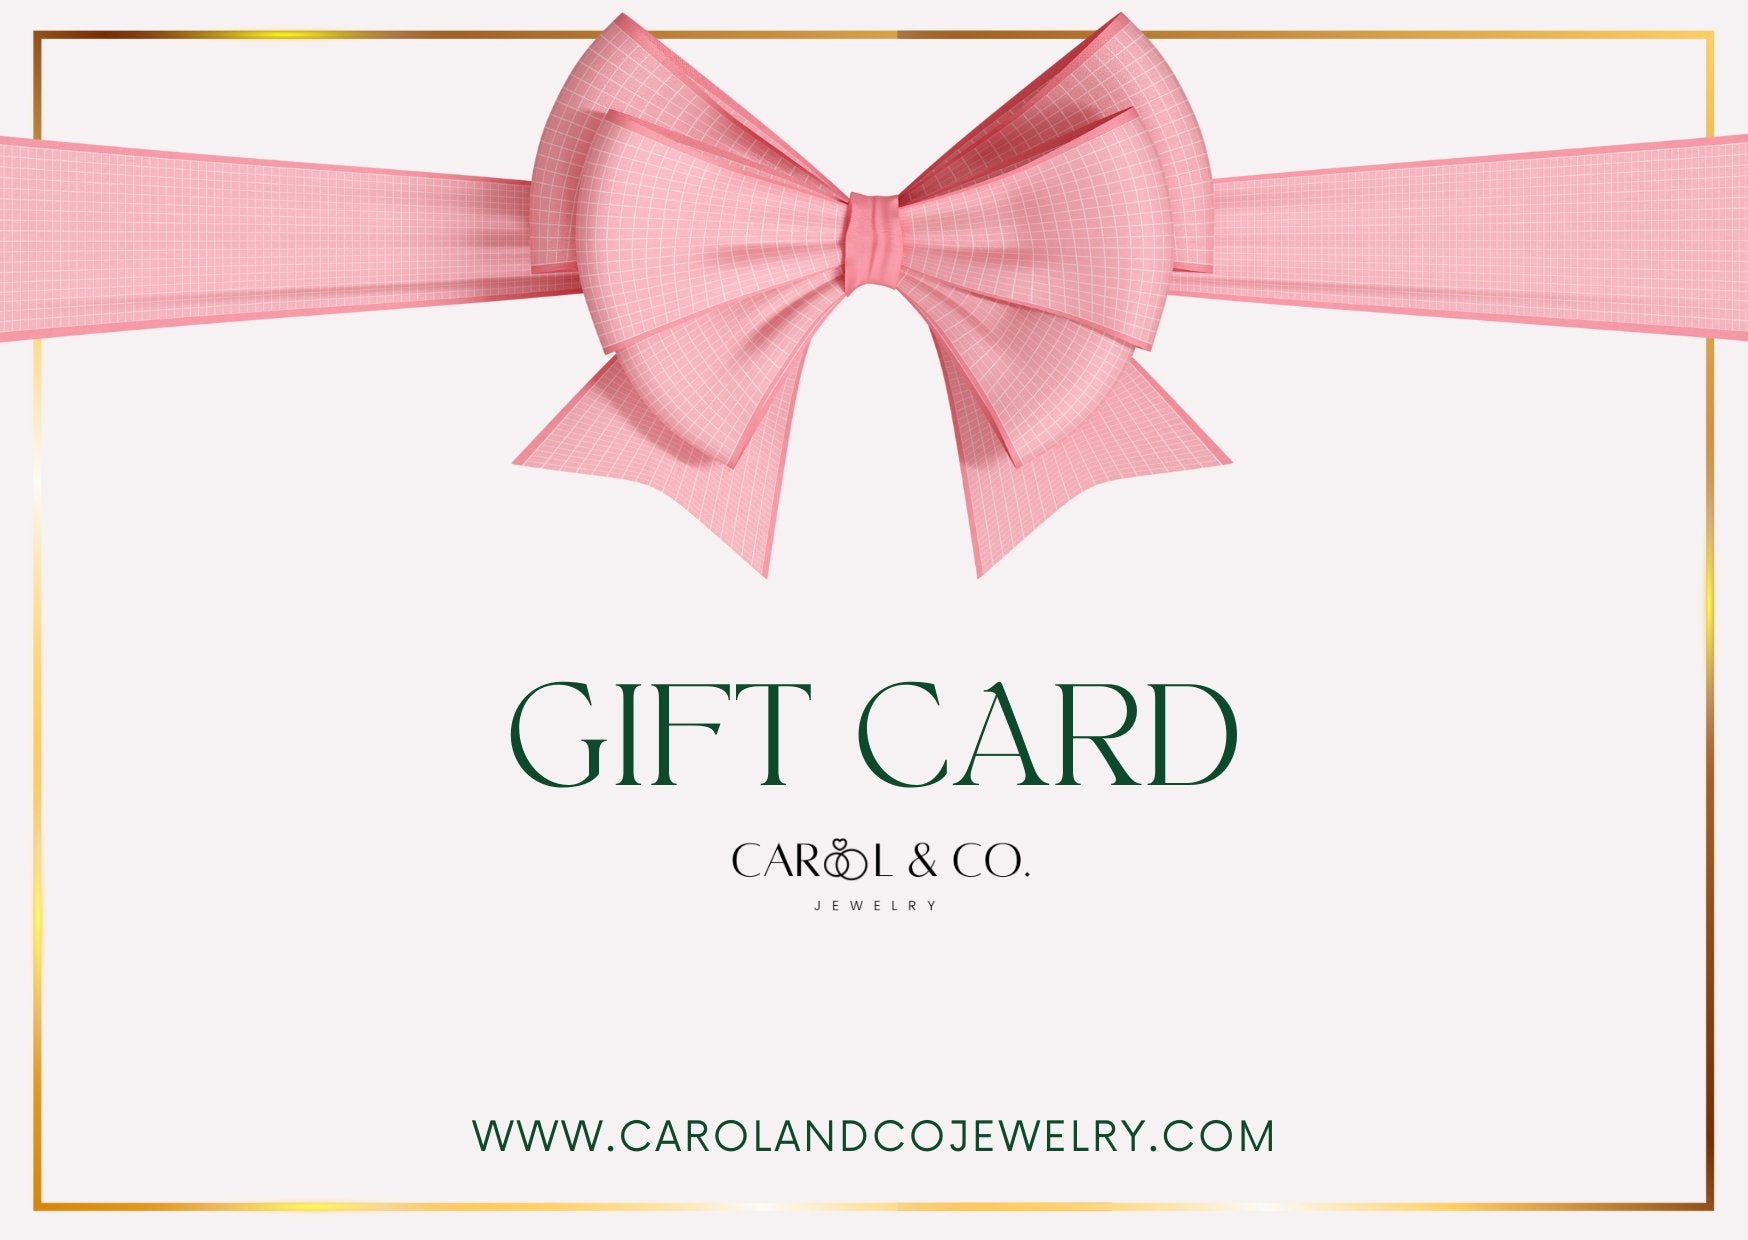 CAROL'S GIFT CARD - Carol & Co Jewelry